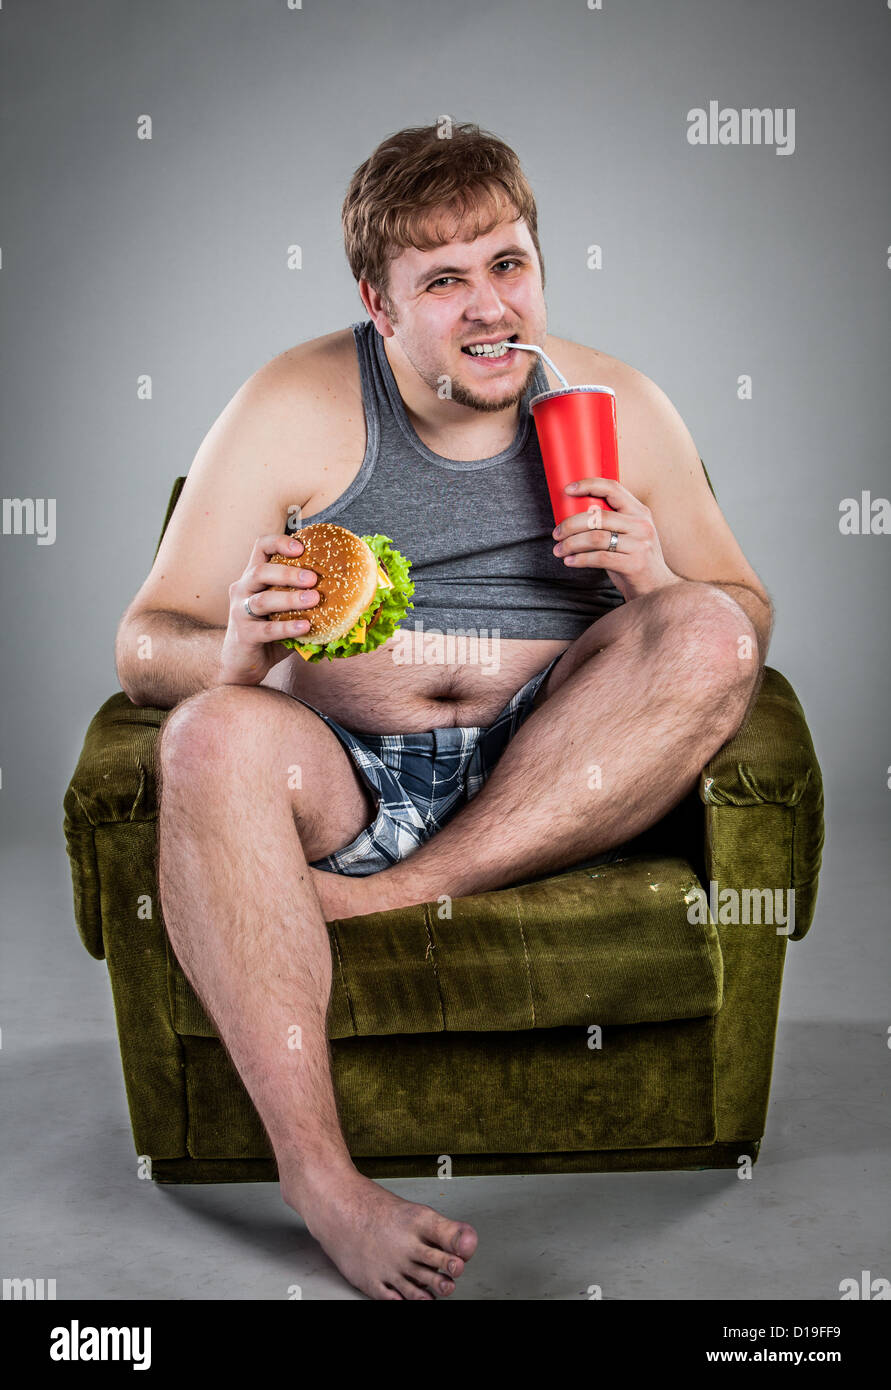 fat man eating hamburger seated on armchair Stock Photo